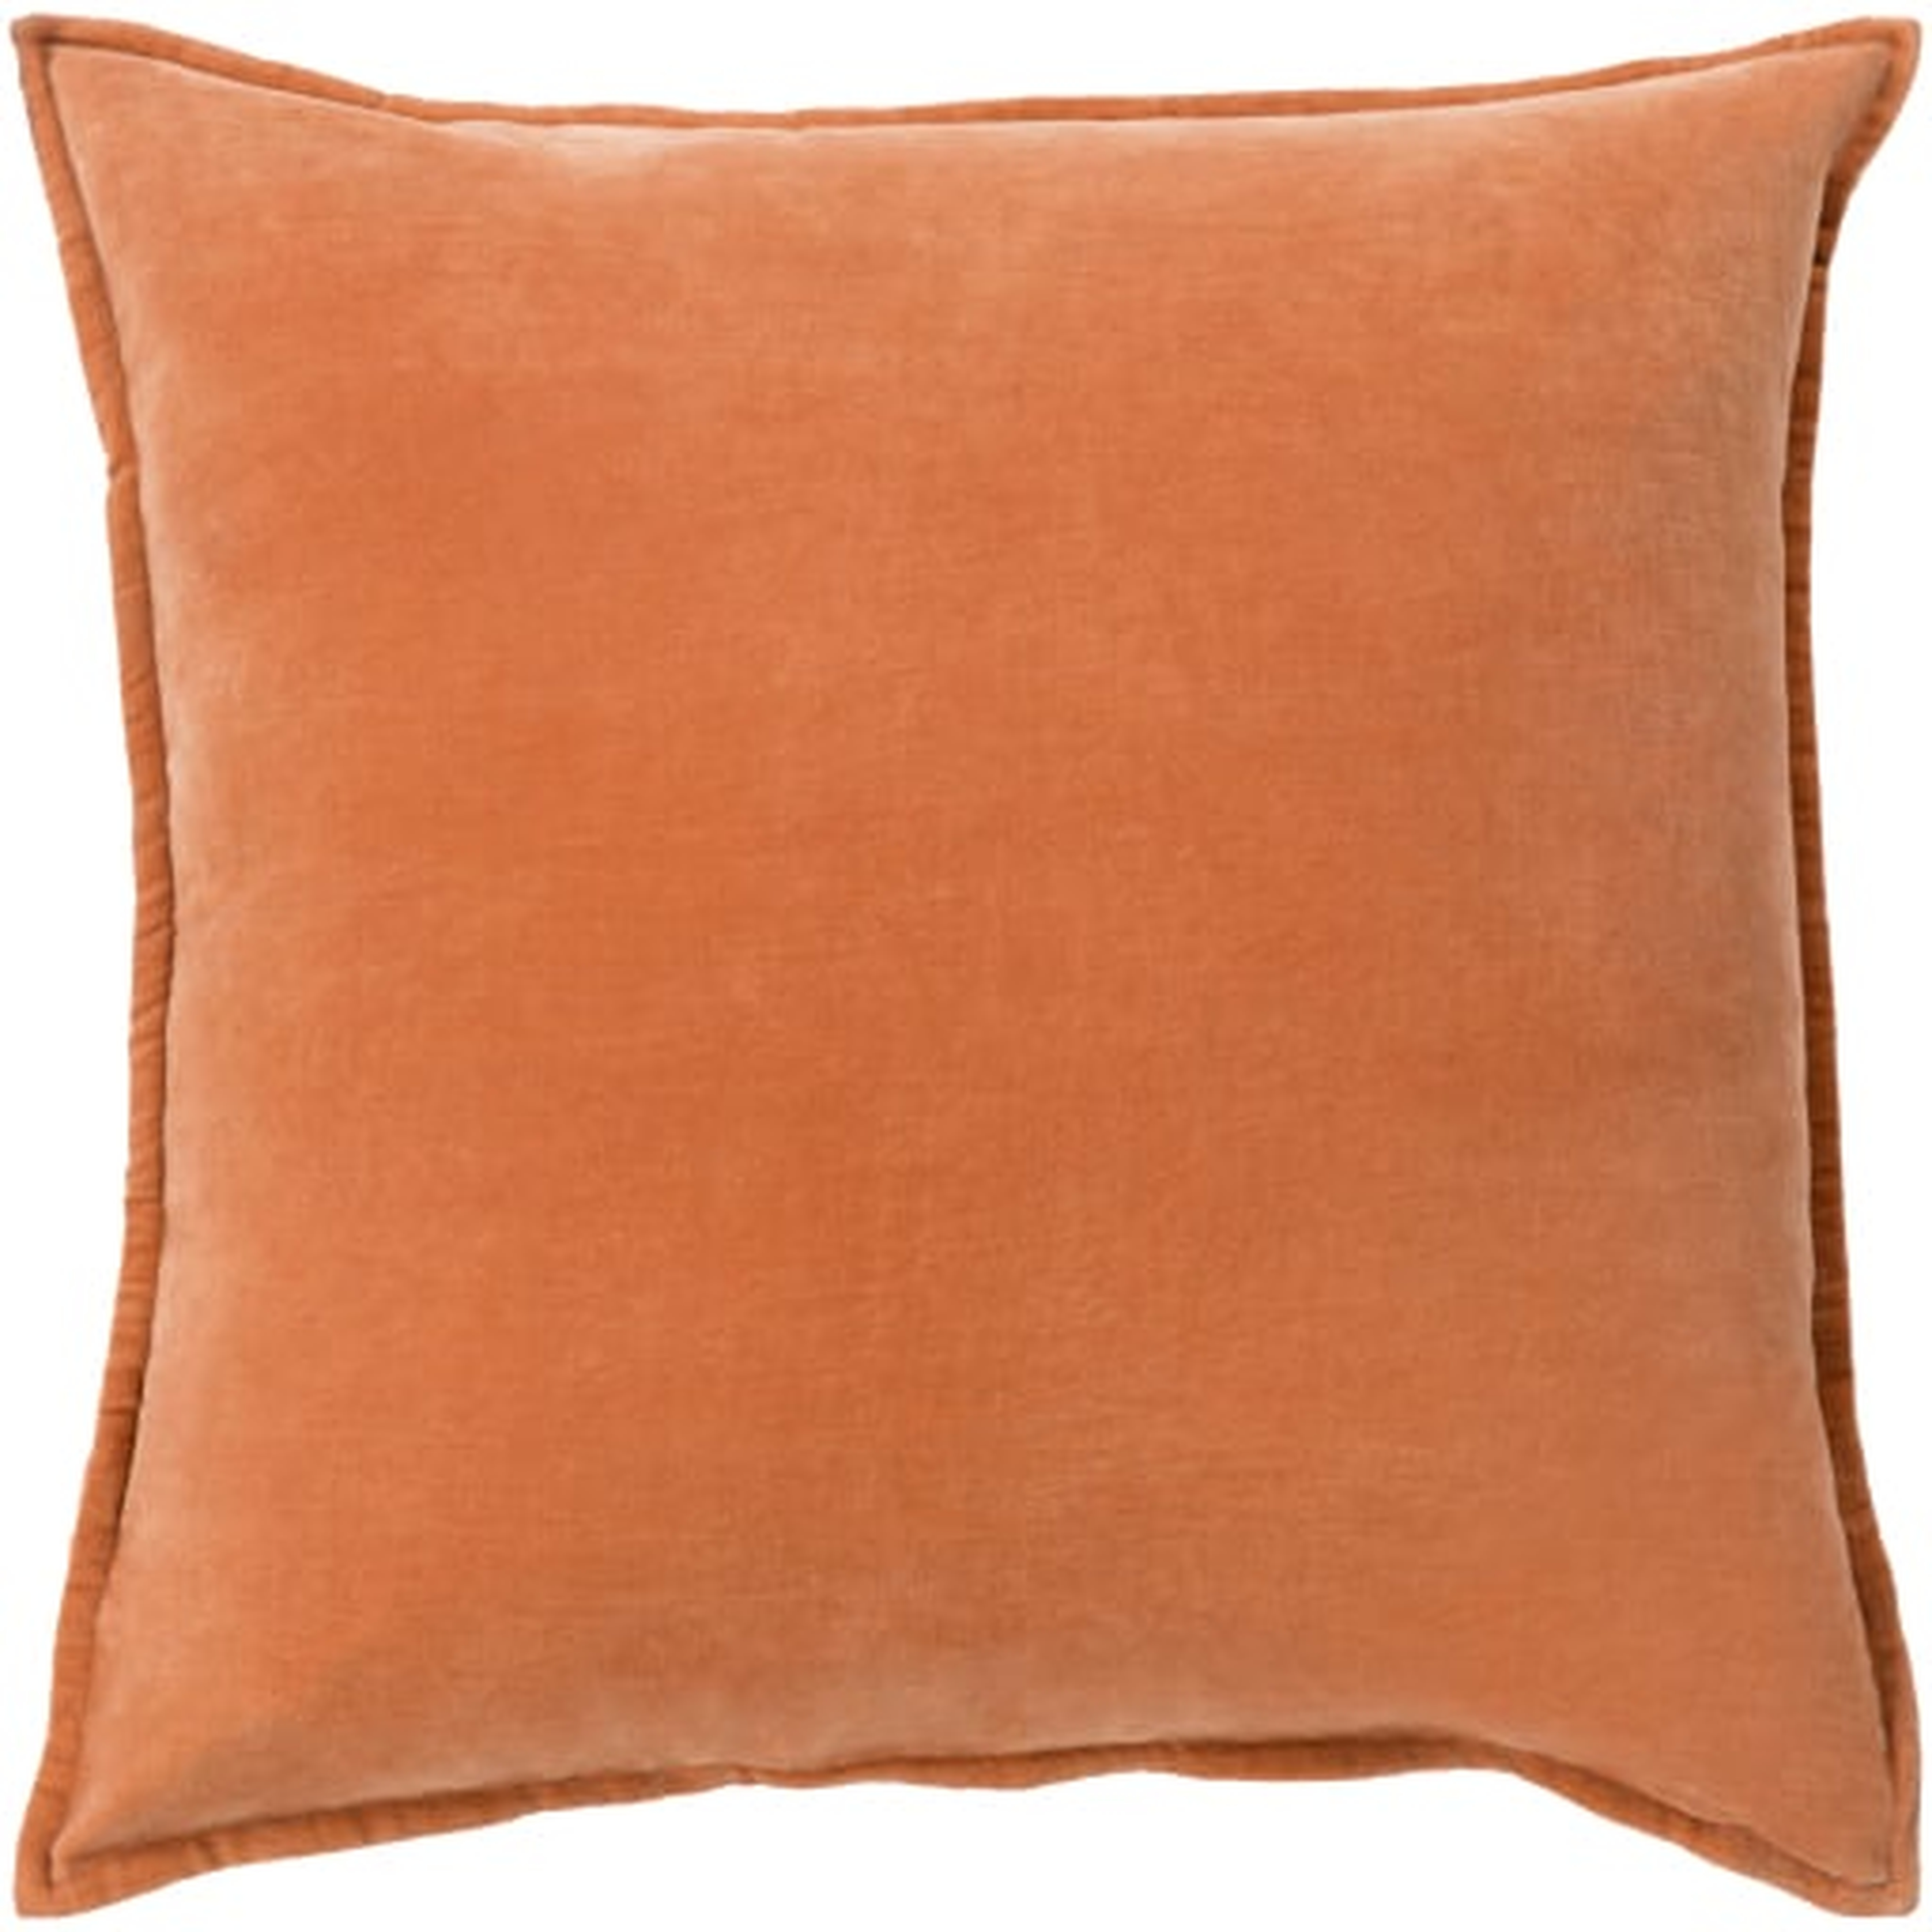 Cotton Velvet Throw Pillow, 18" x 18", with poly insert - Surya